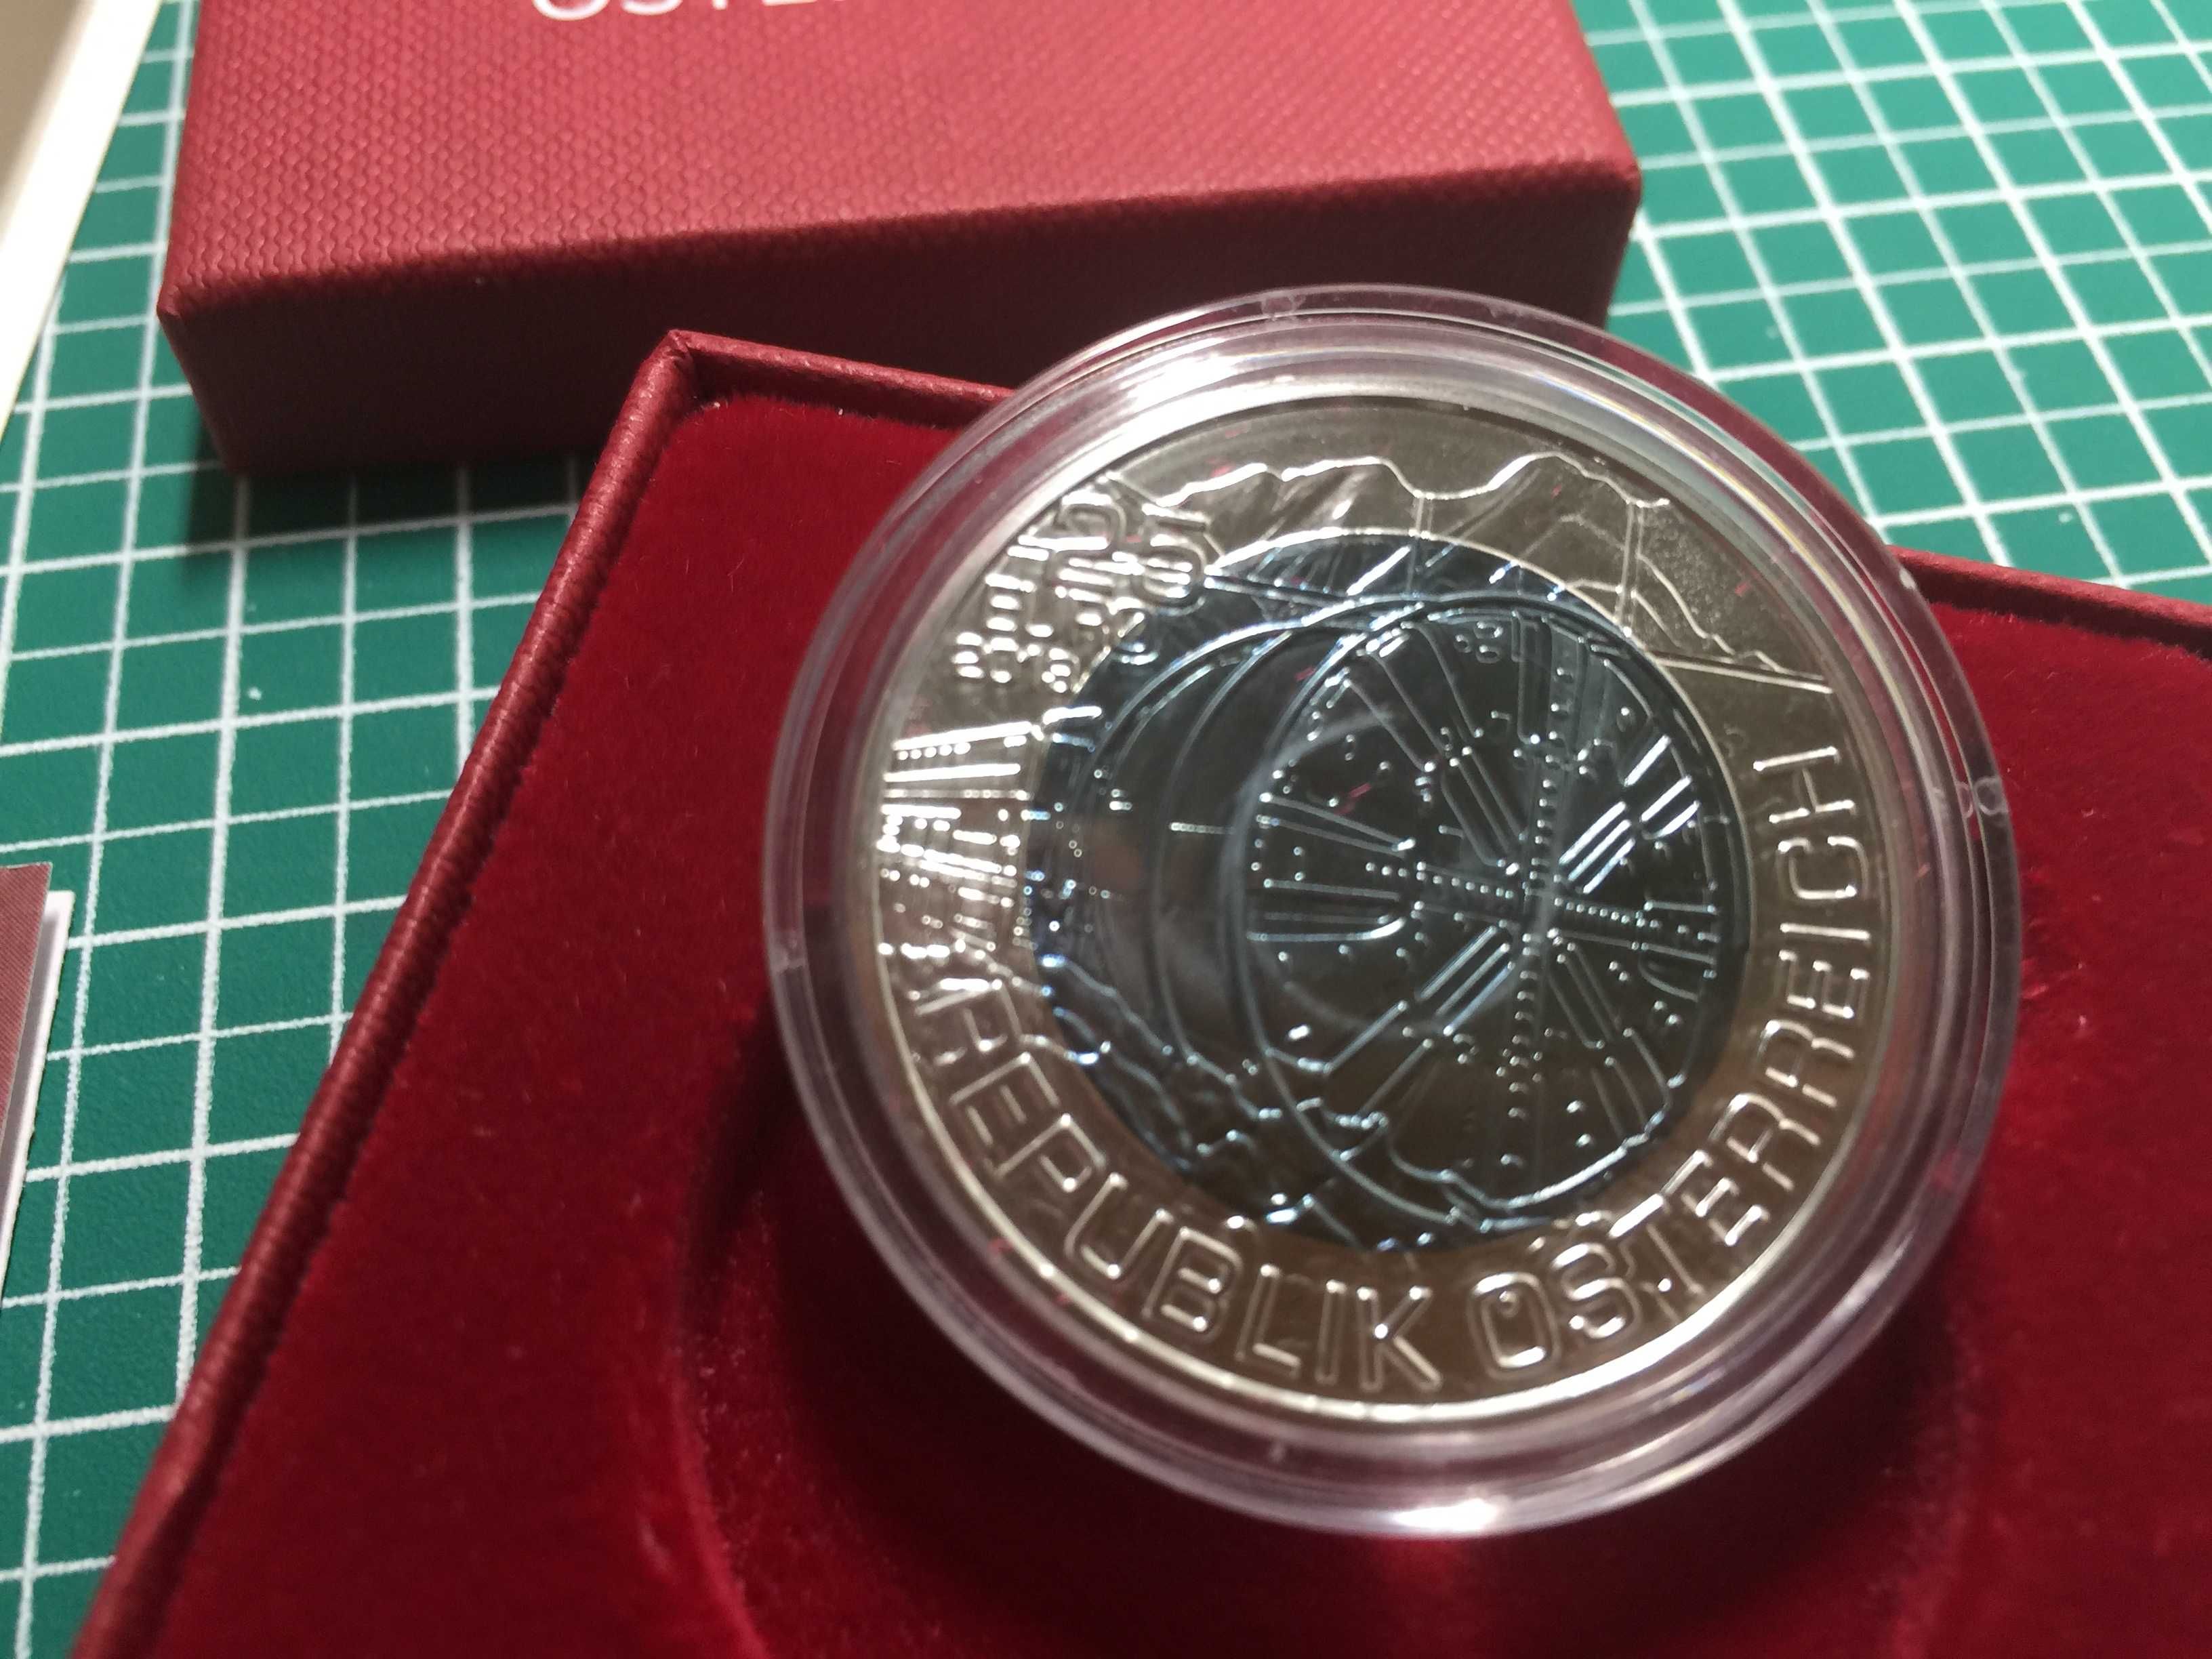 Srebrna moneta kolekcjonerska z niobem 25 Euro Tunnelbau 2013 – unikat